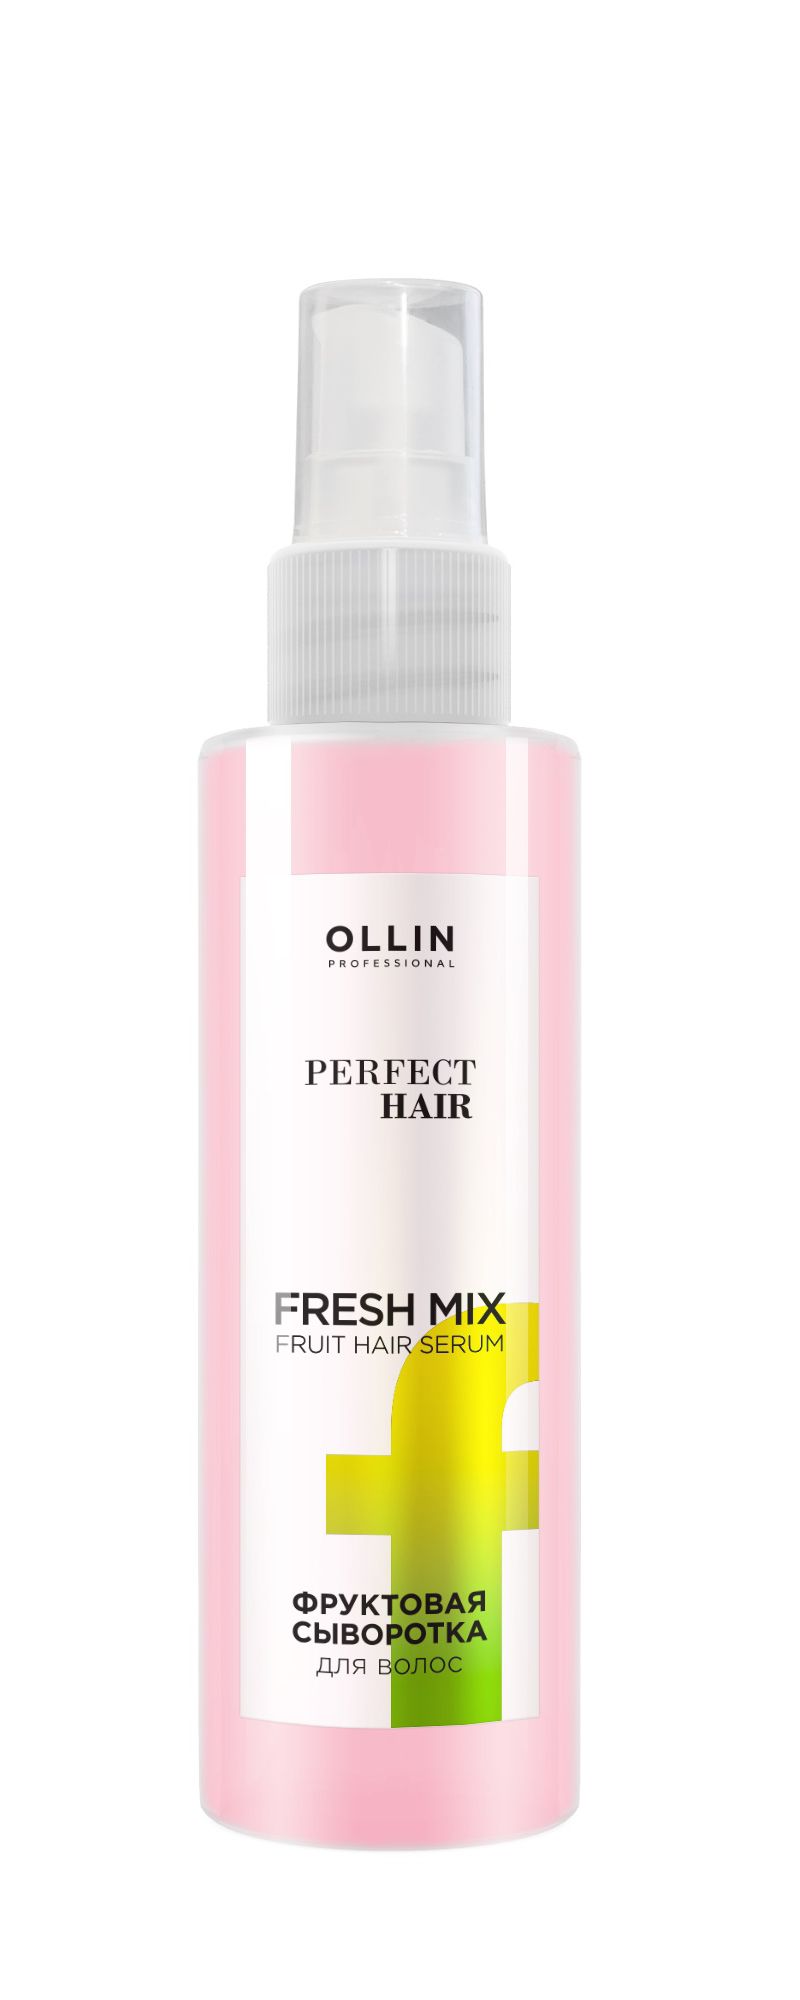 Ollin, Фруктовая сыворотка для волос «Fresh Mix» серии «Perfect Hair», Фото интернет-магазин Премиум-Косметика.РФ